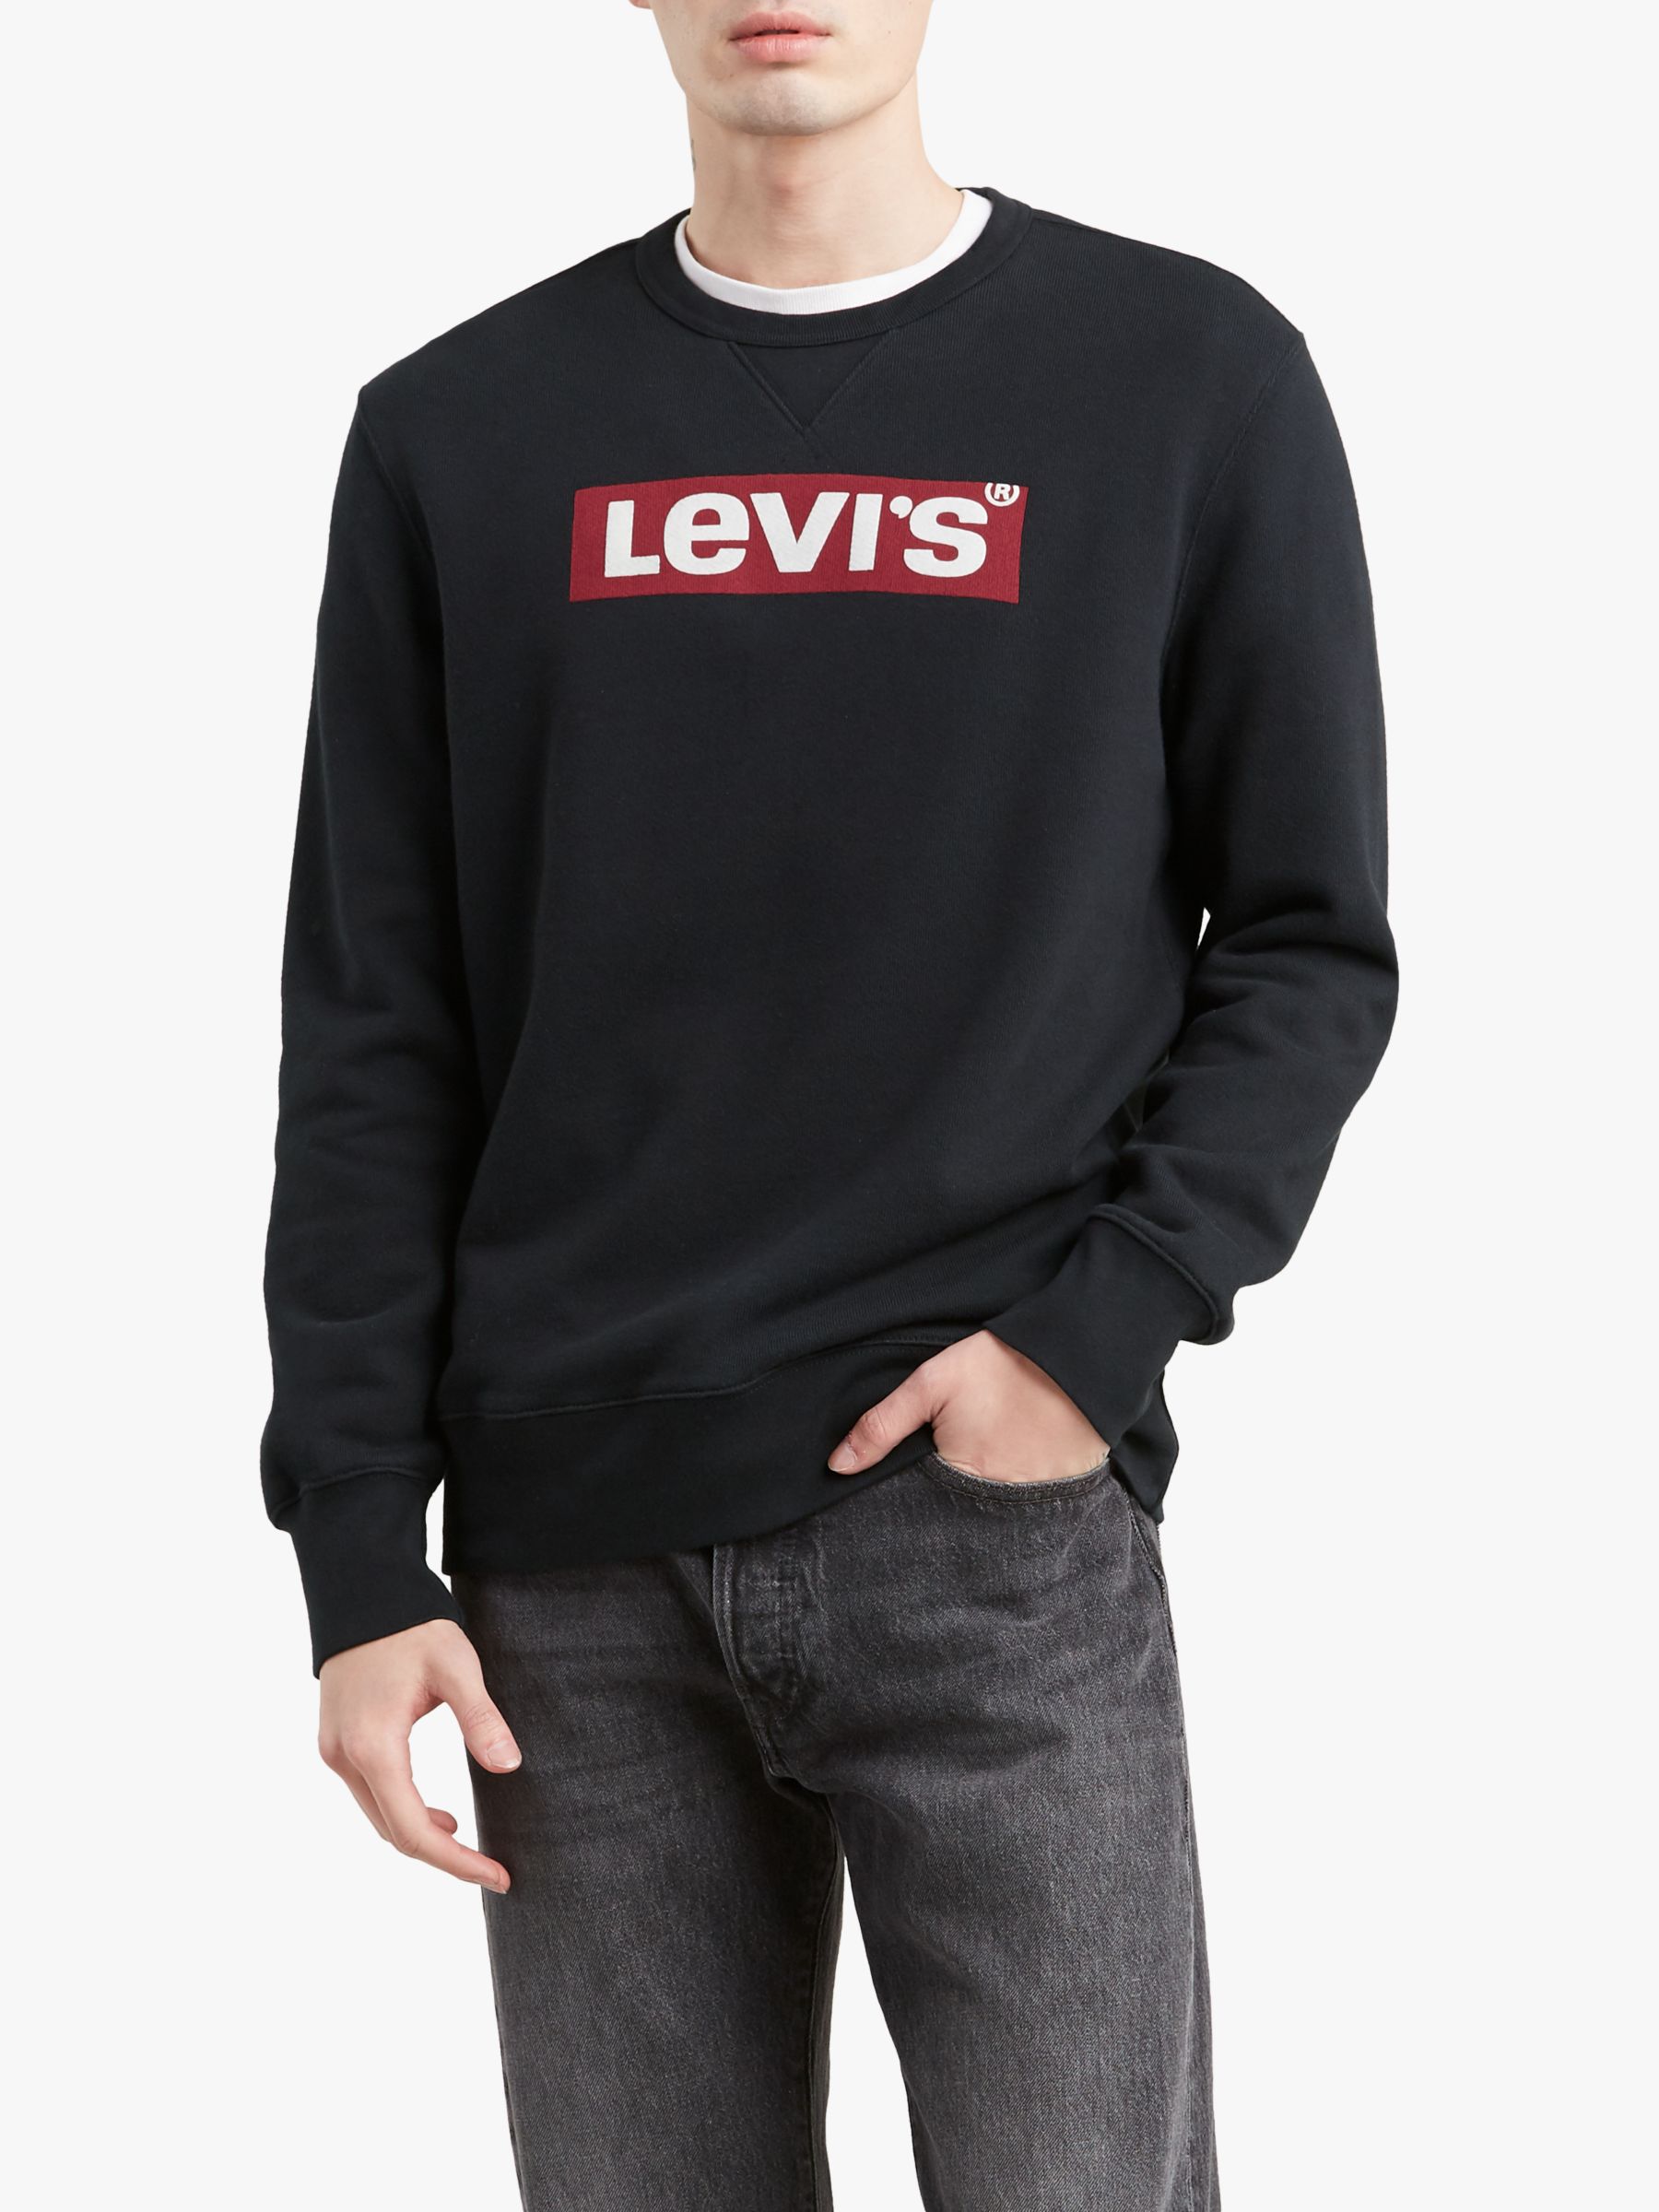 levi's logo sweatshirt